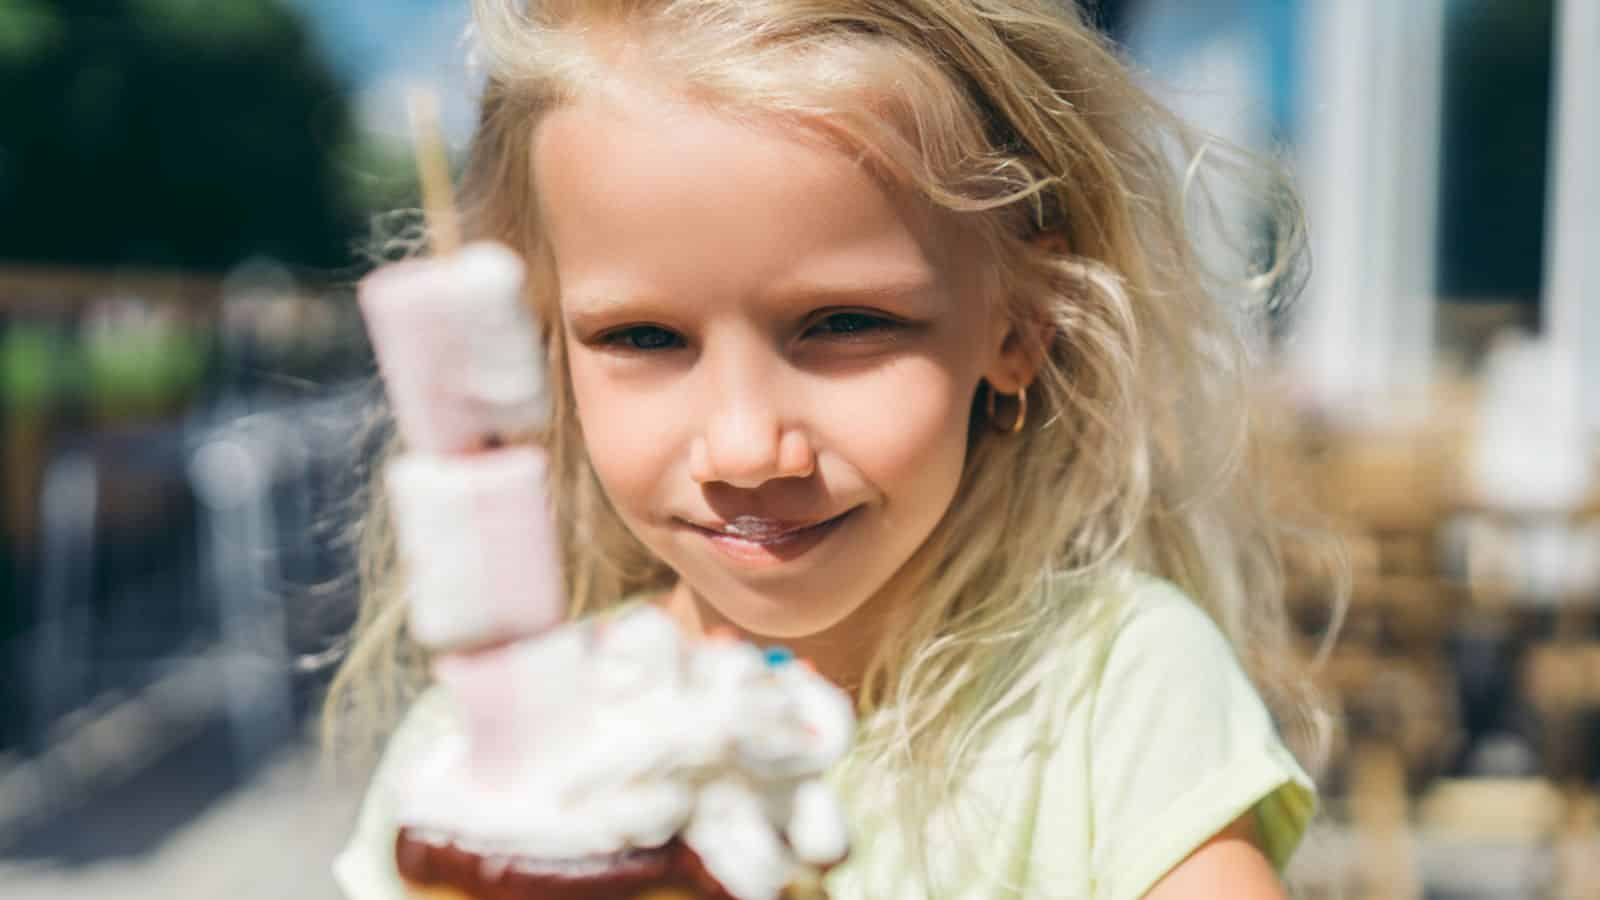 Close up portrait of adorable little kid eating tasty dessert